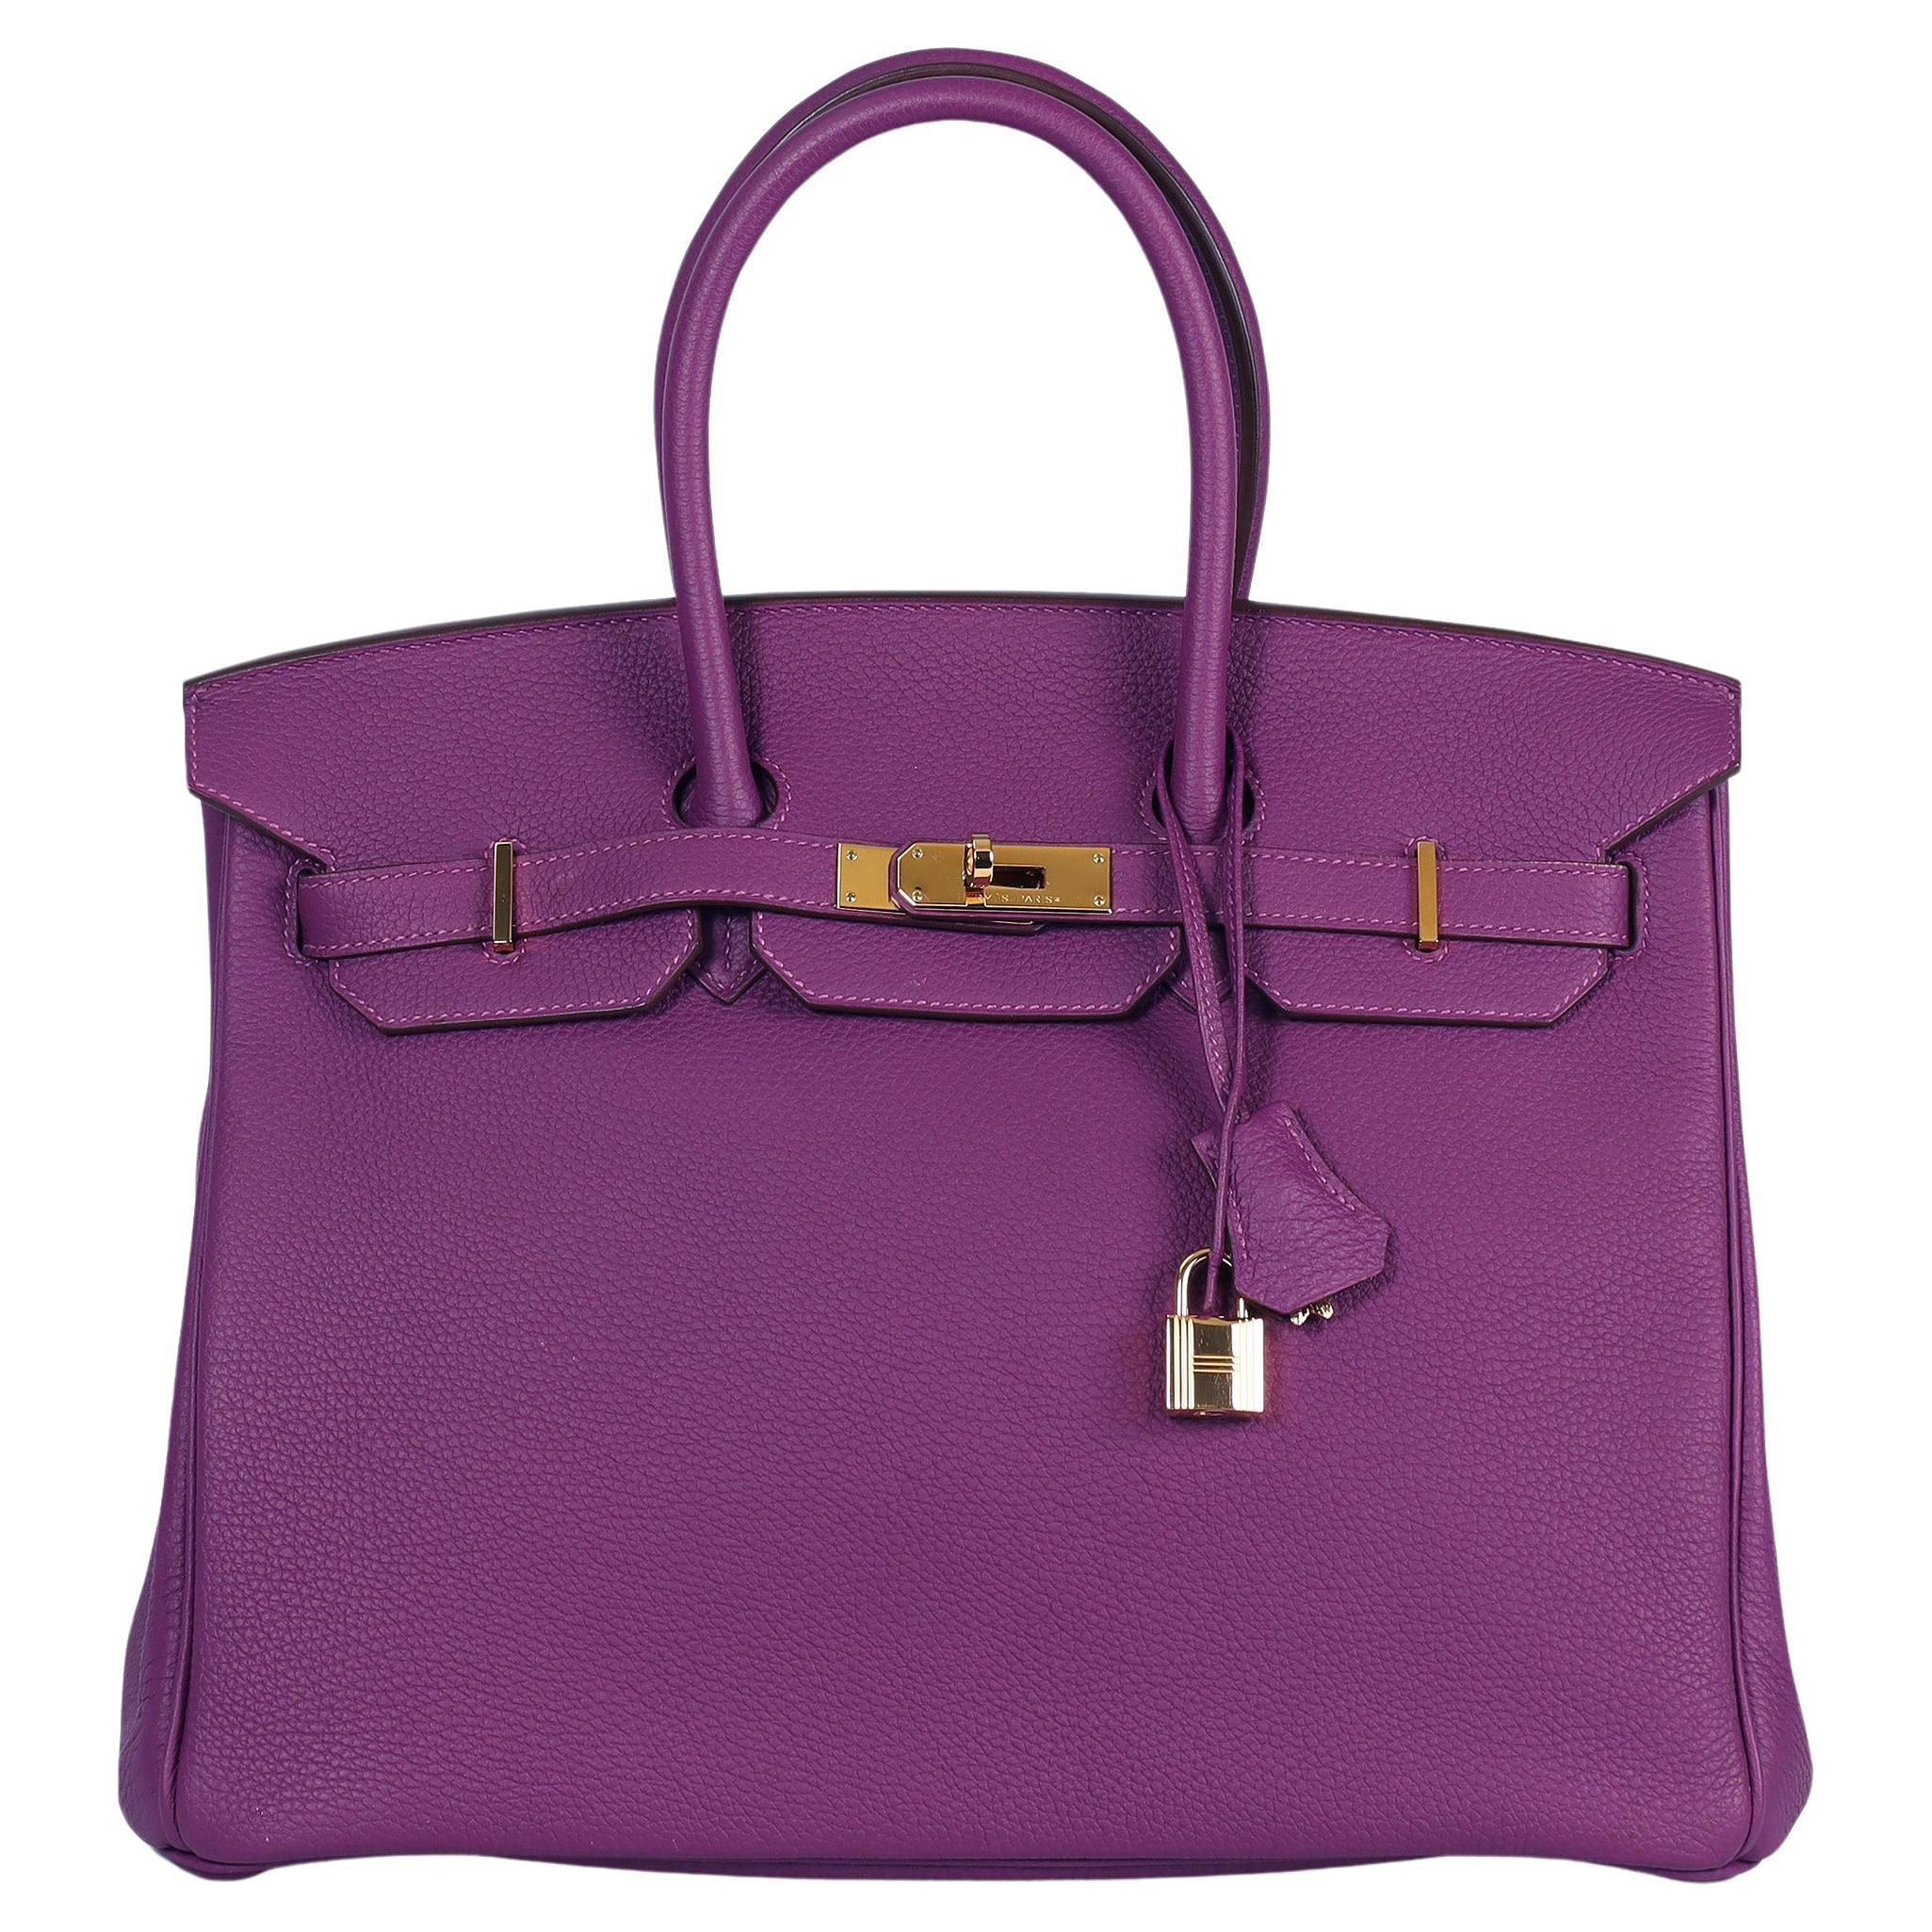 Hermès 2014 Birkin 35cm Togo Leather Bag en vente